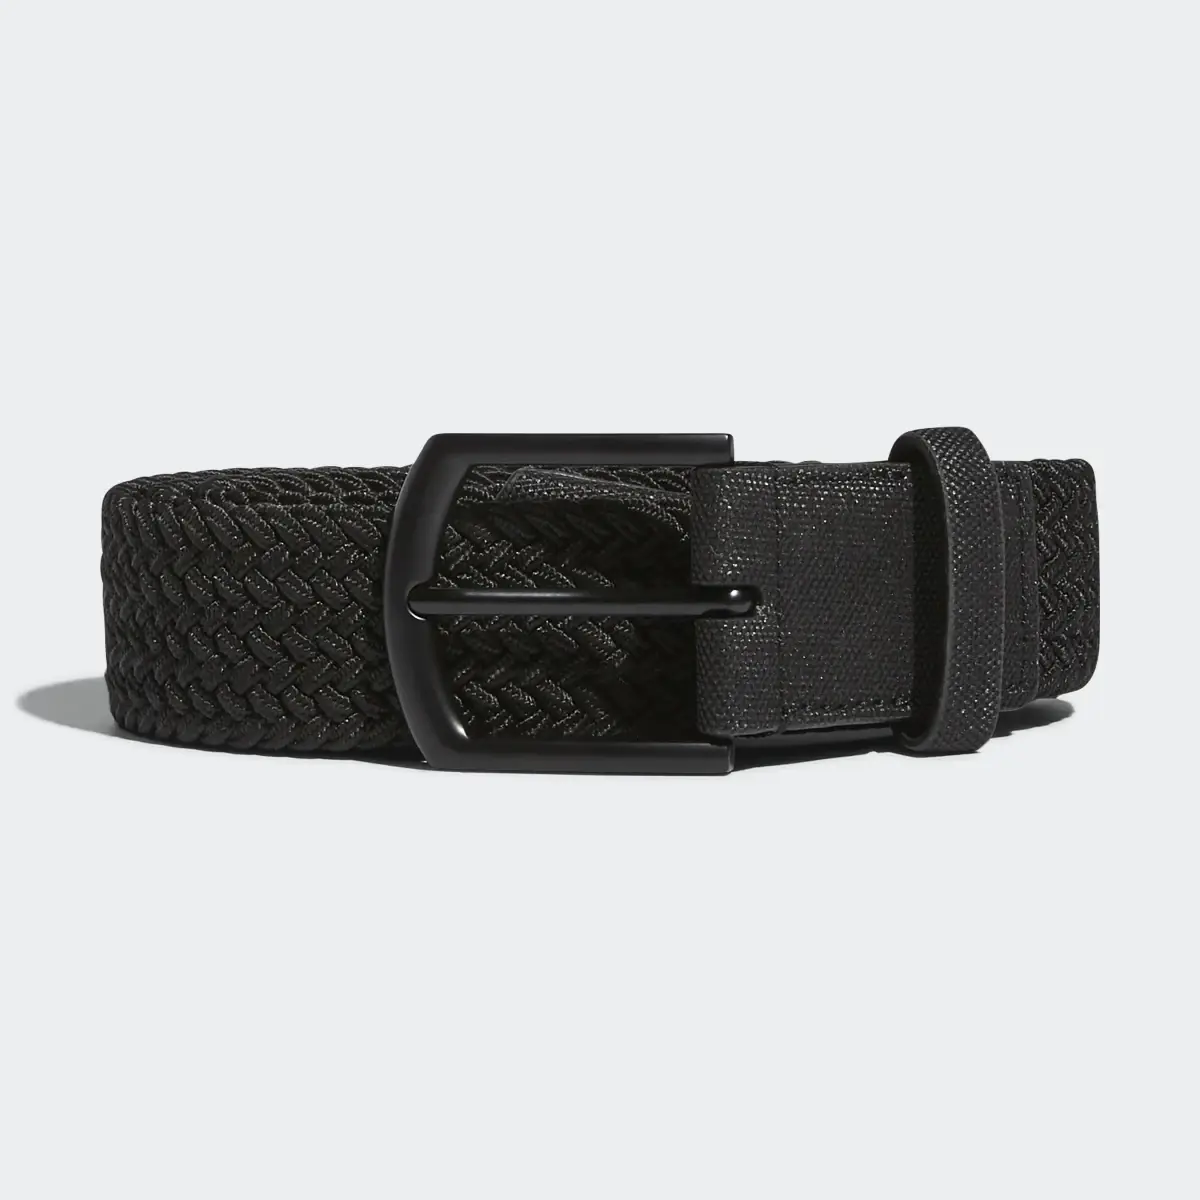 Adidas Men's Braided Stretch Belt. 2